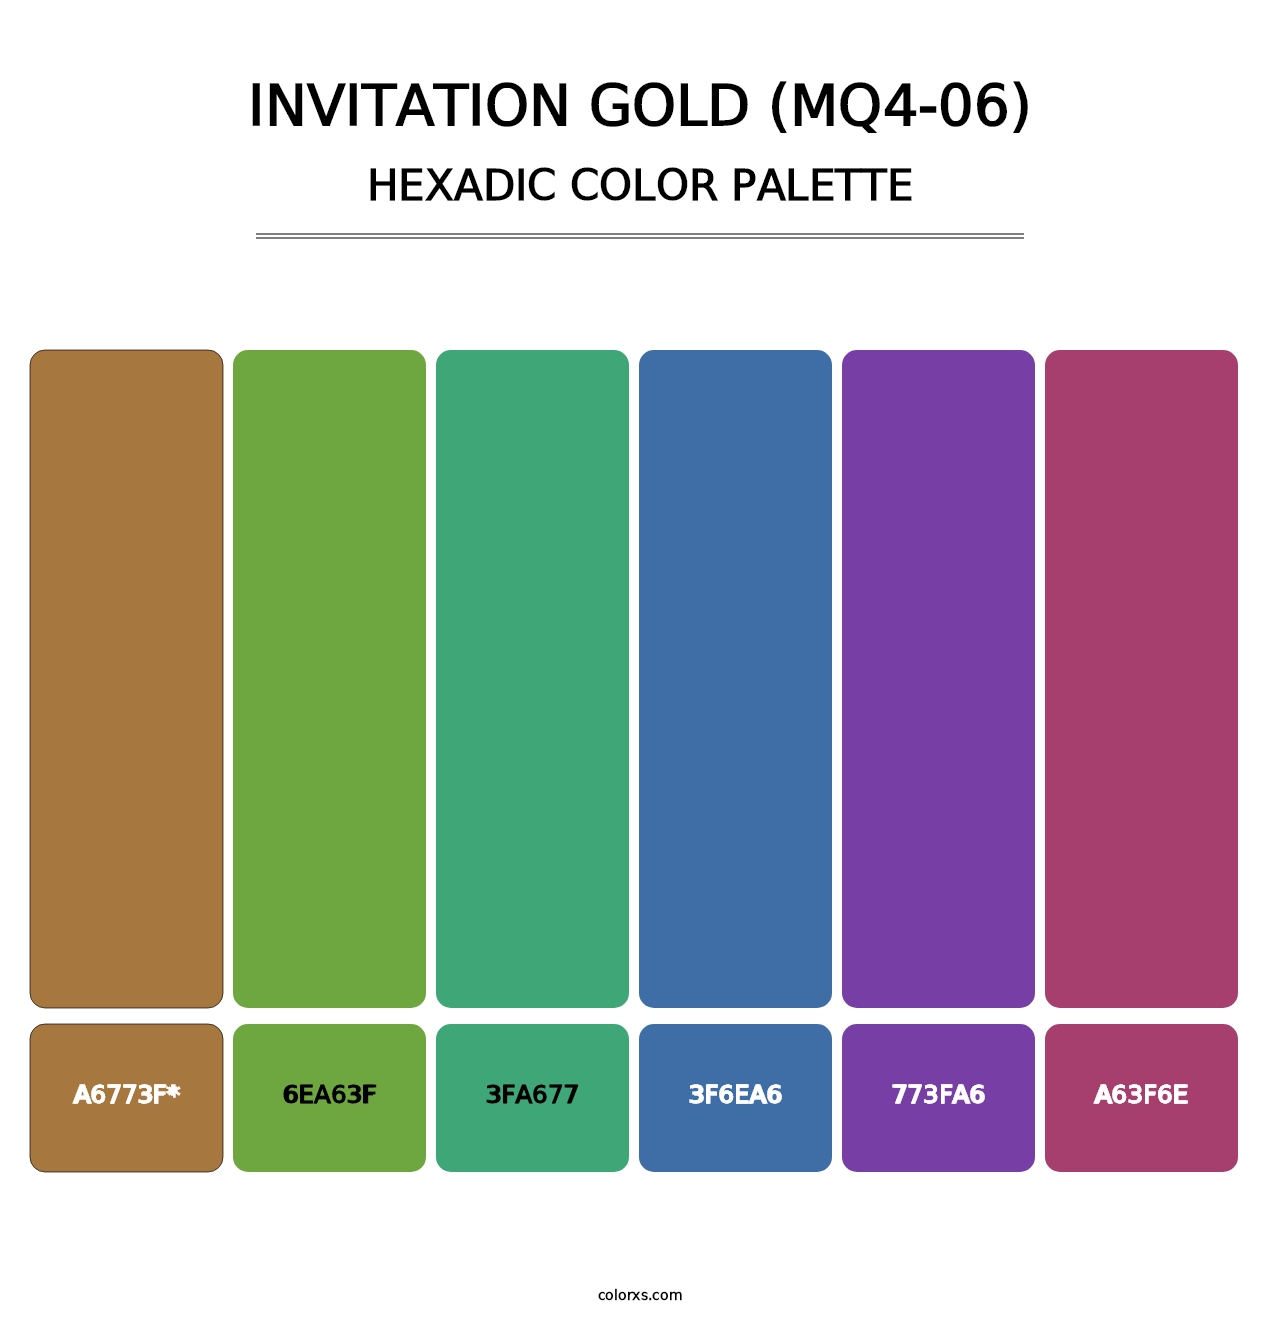 Invitation Gold (MQ4-06) - Hexadic Color Palette